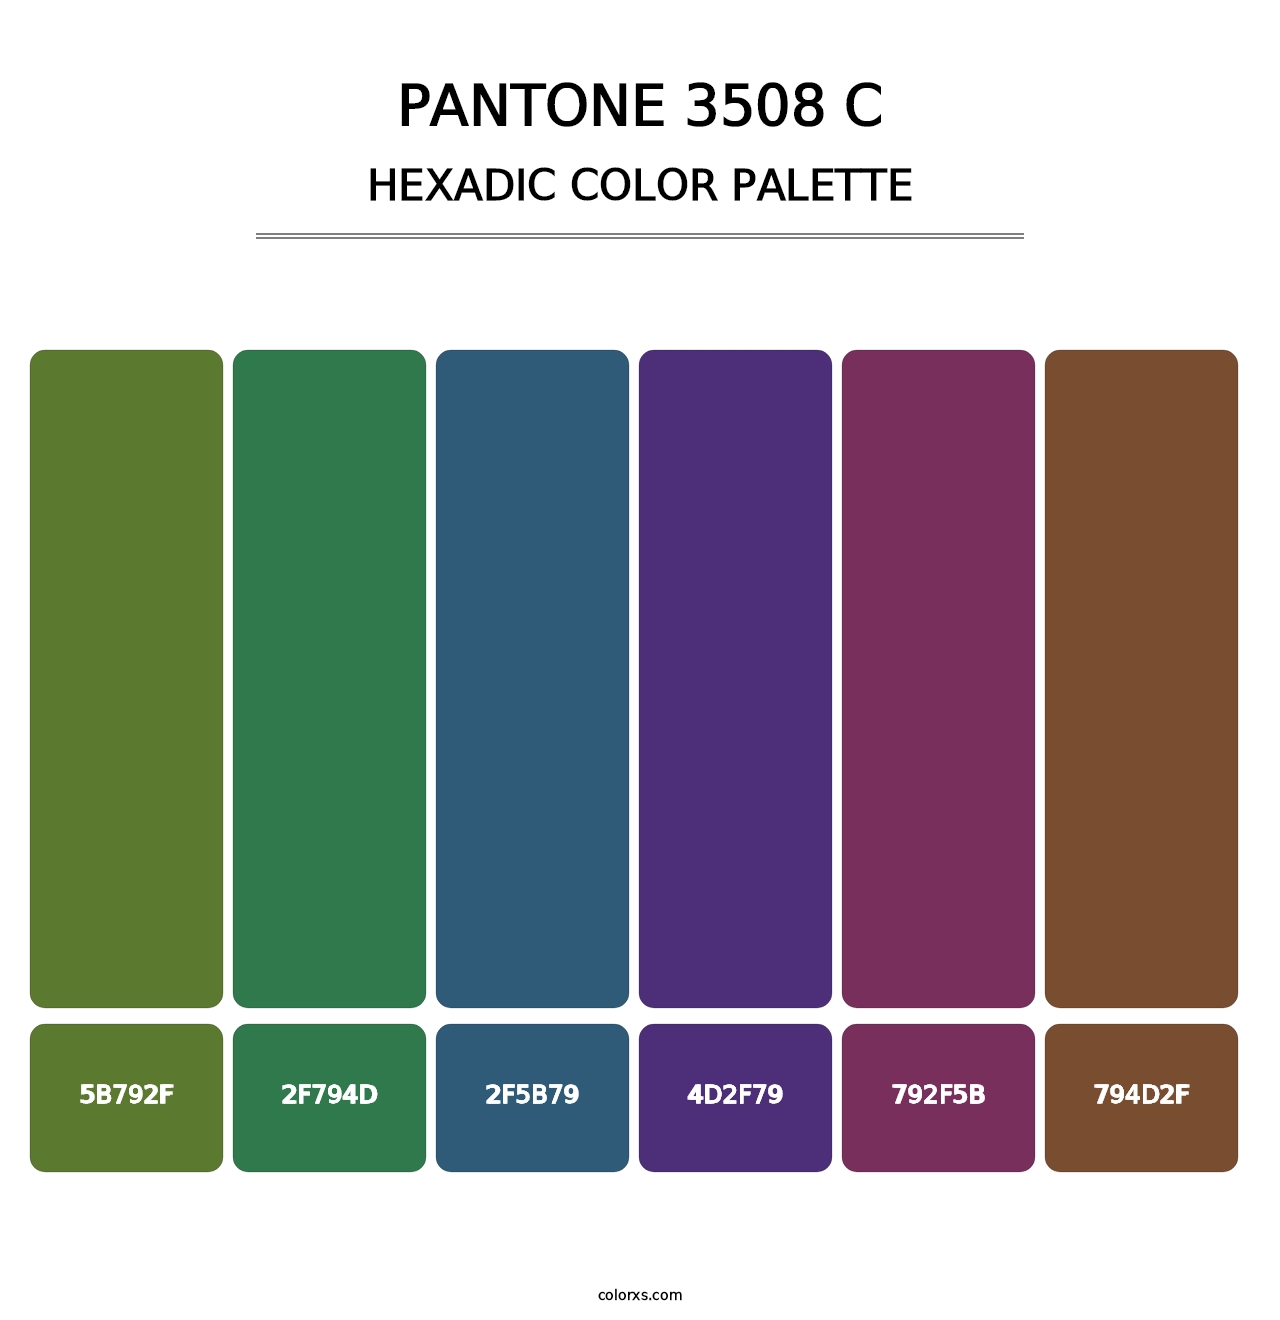 PANTONE 3508 C - Hexadic Color Palette